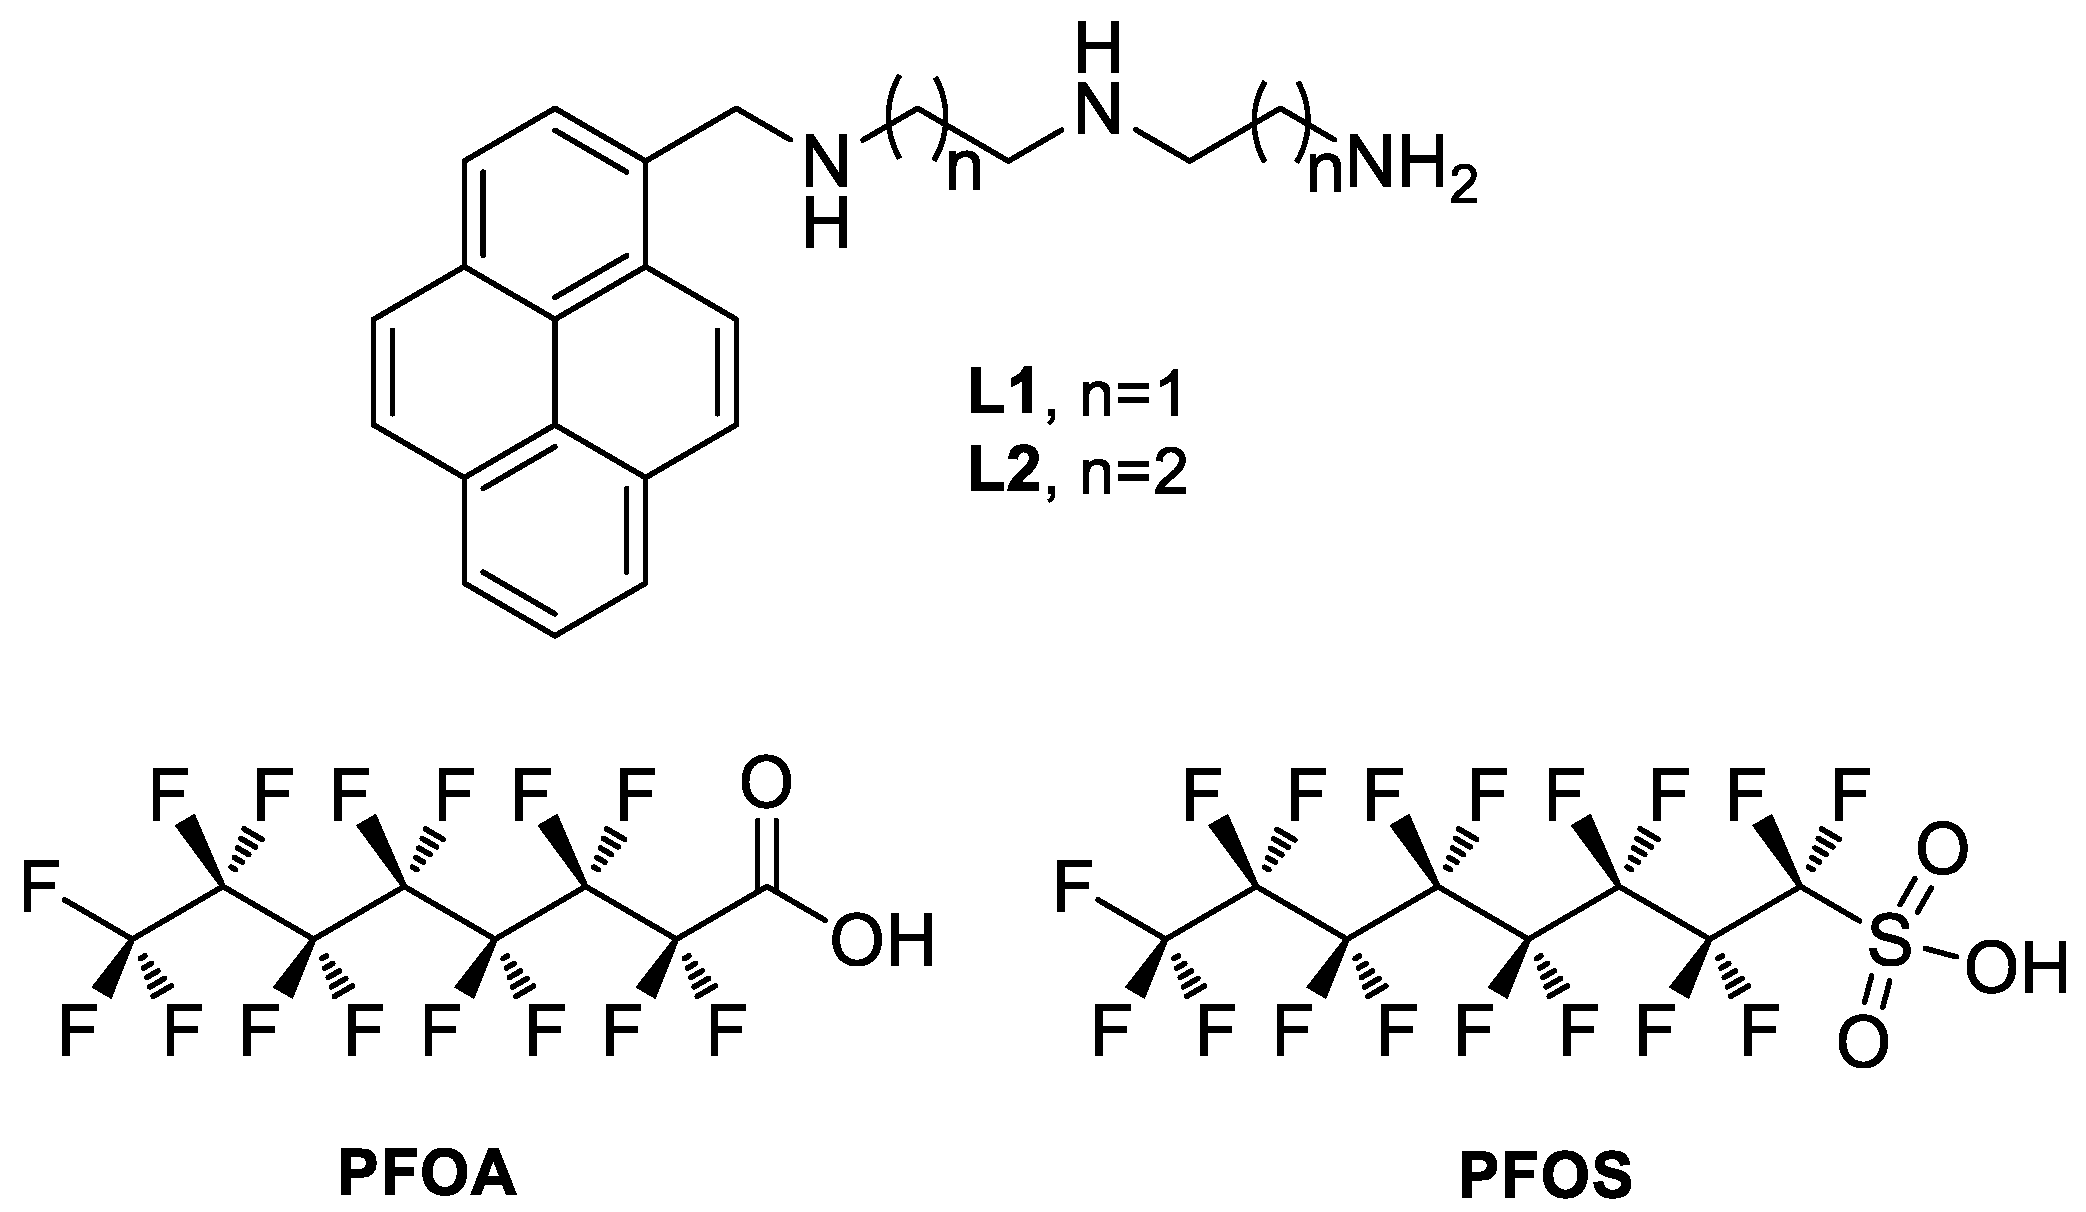 Fluorescéine liquide - Physitek - Fondis